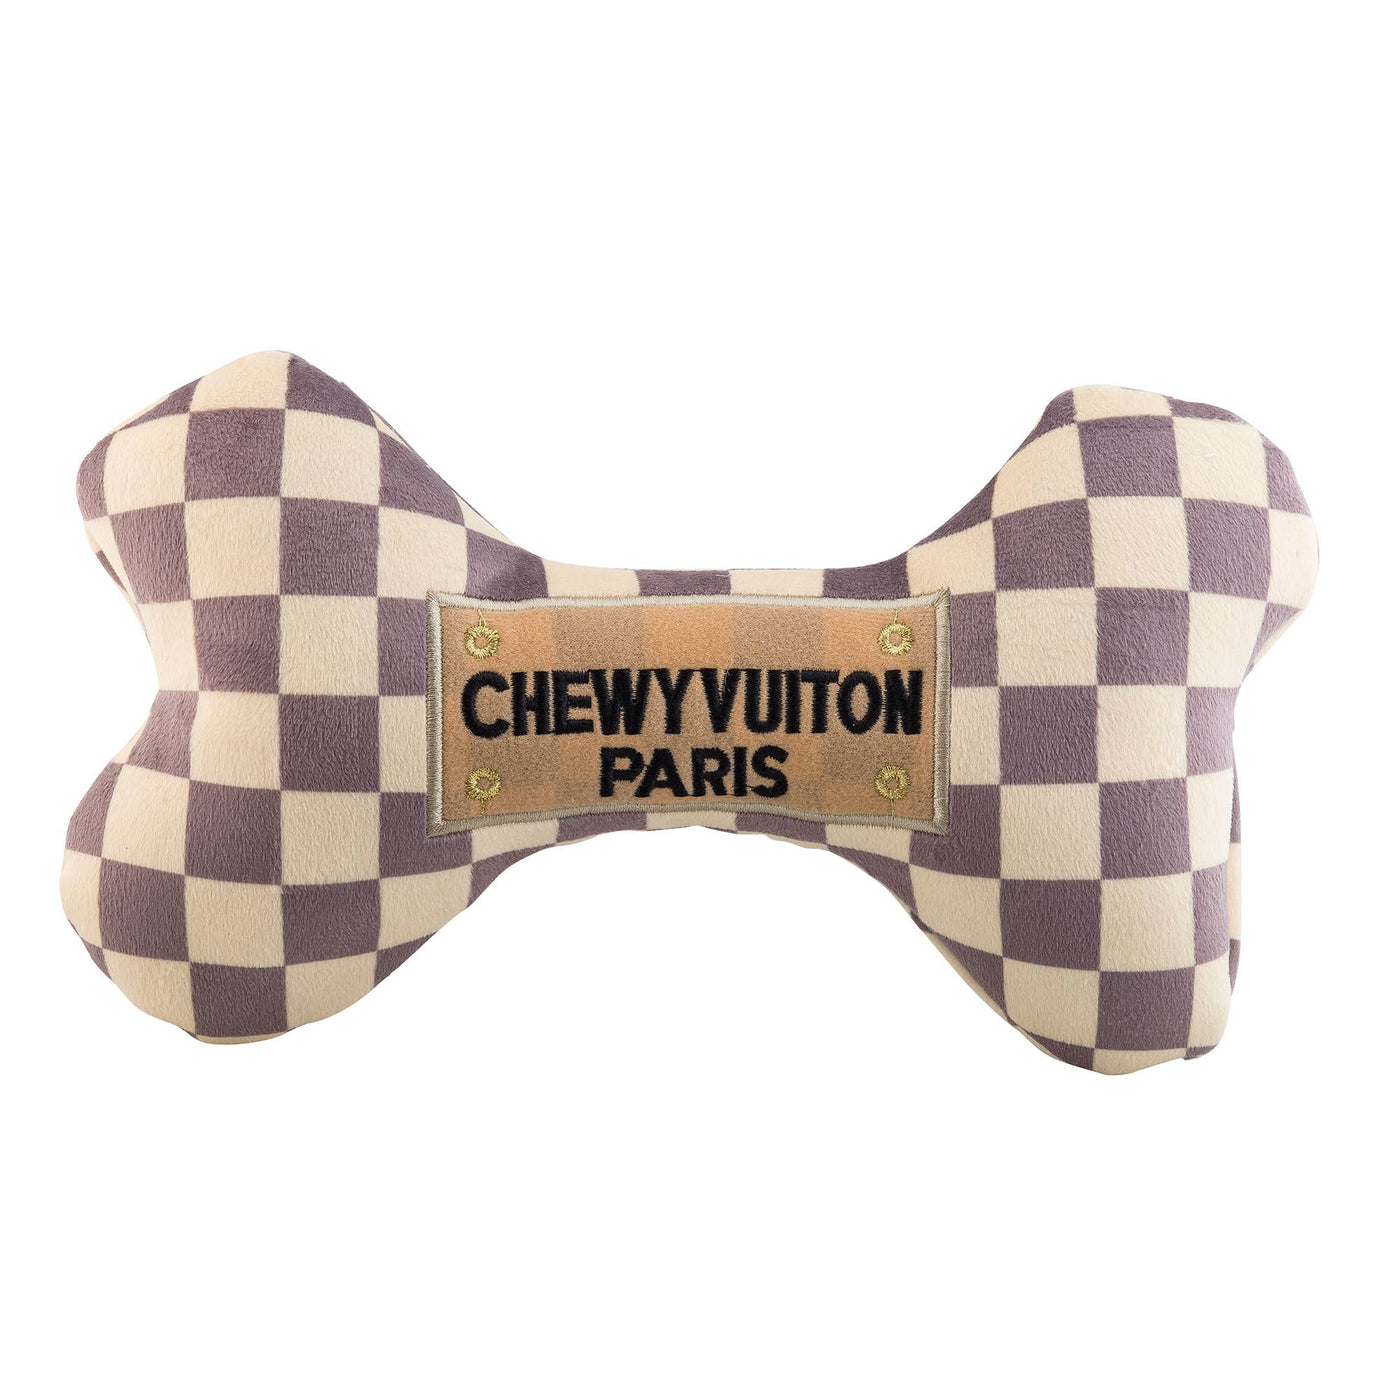 Checker Chewy Vuiton Bones Dog Toy